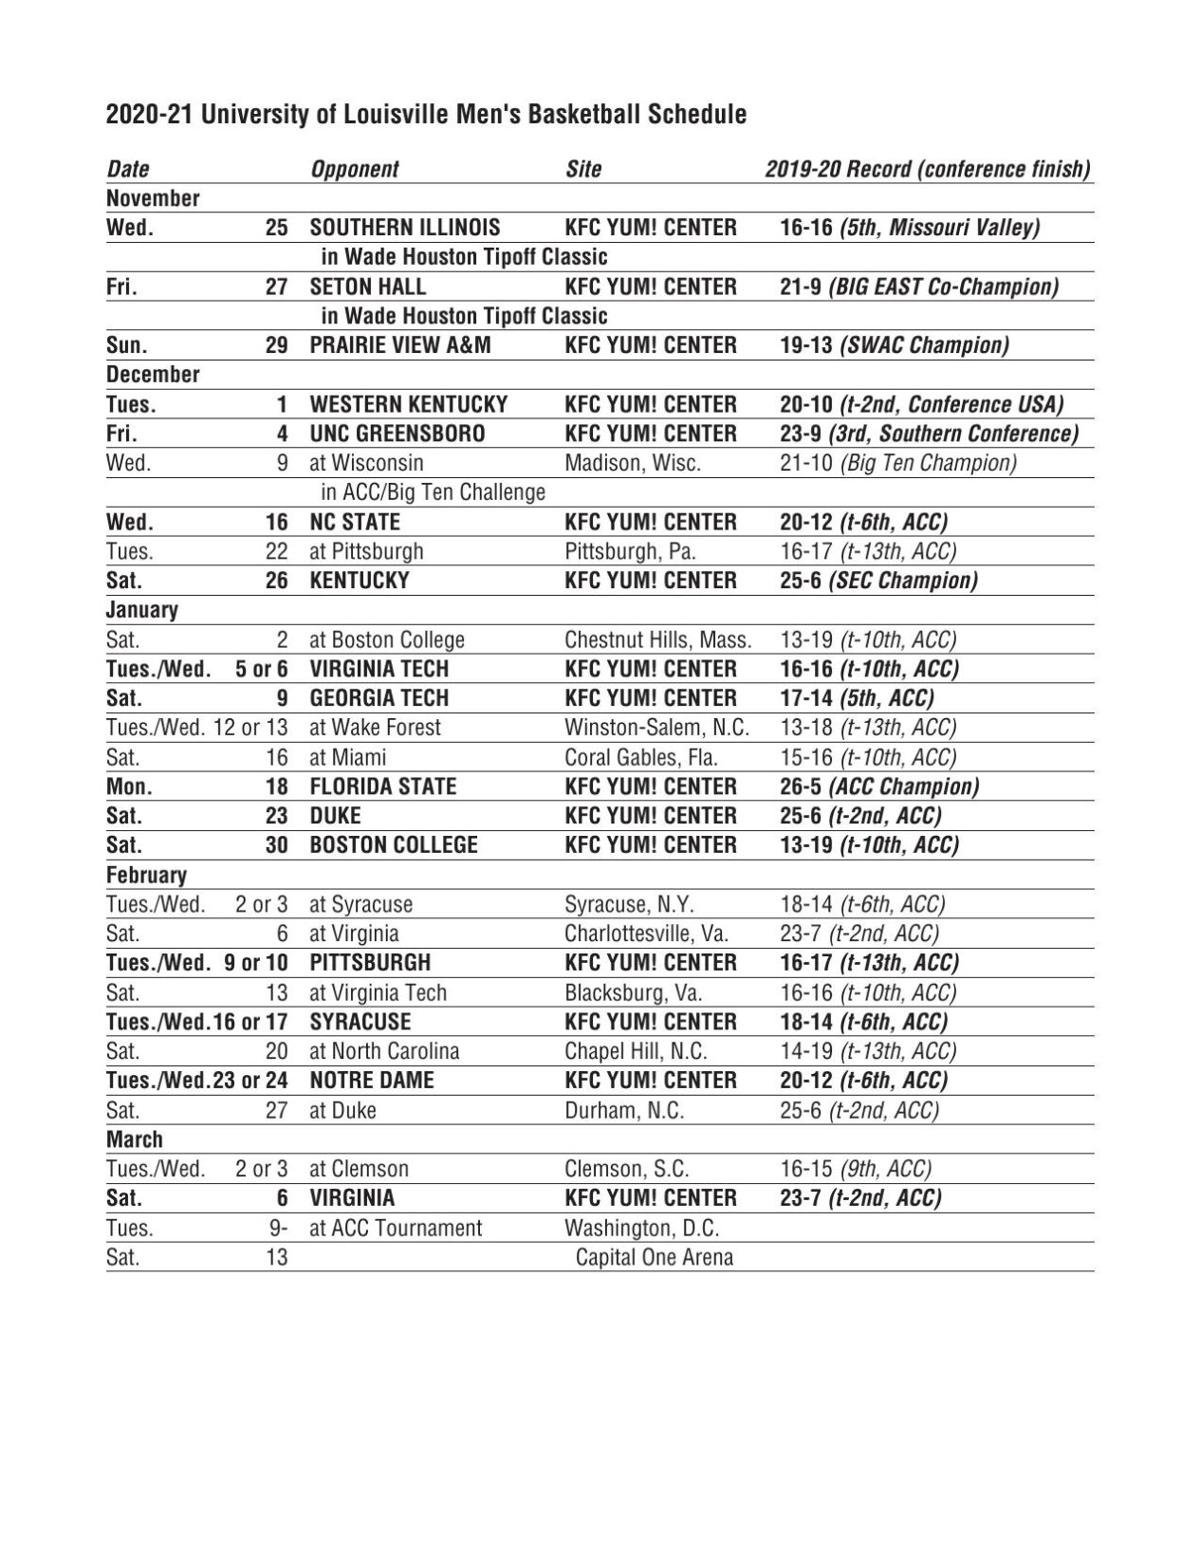 At long last, Louisville men's basketball ACC schedule is set | Sports